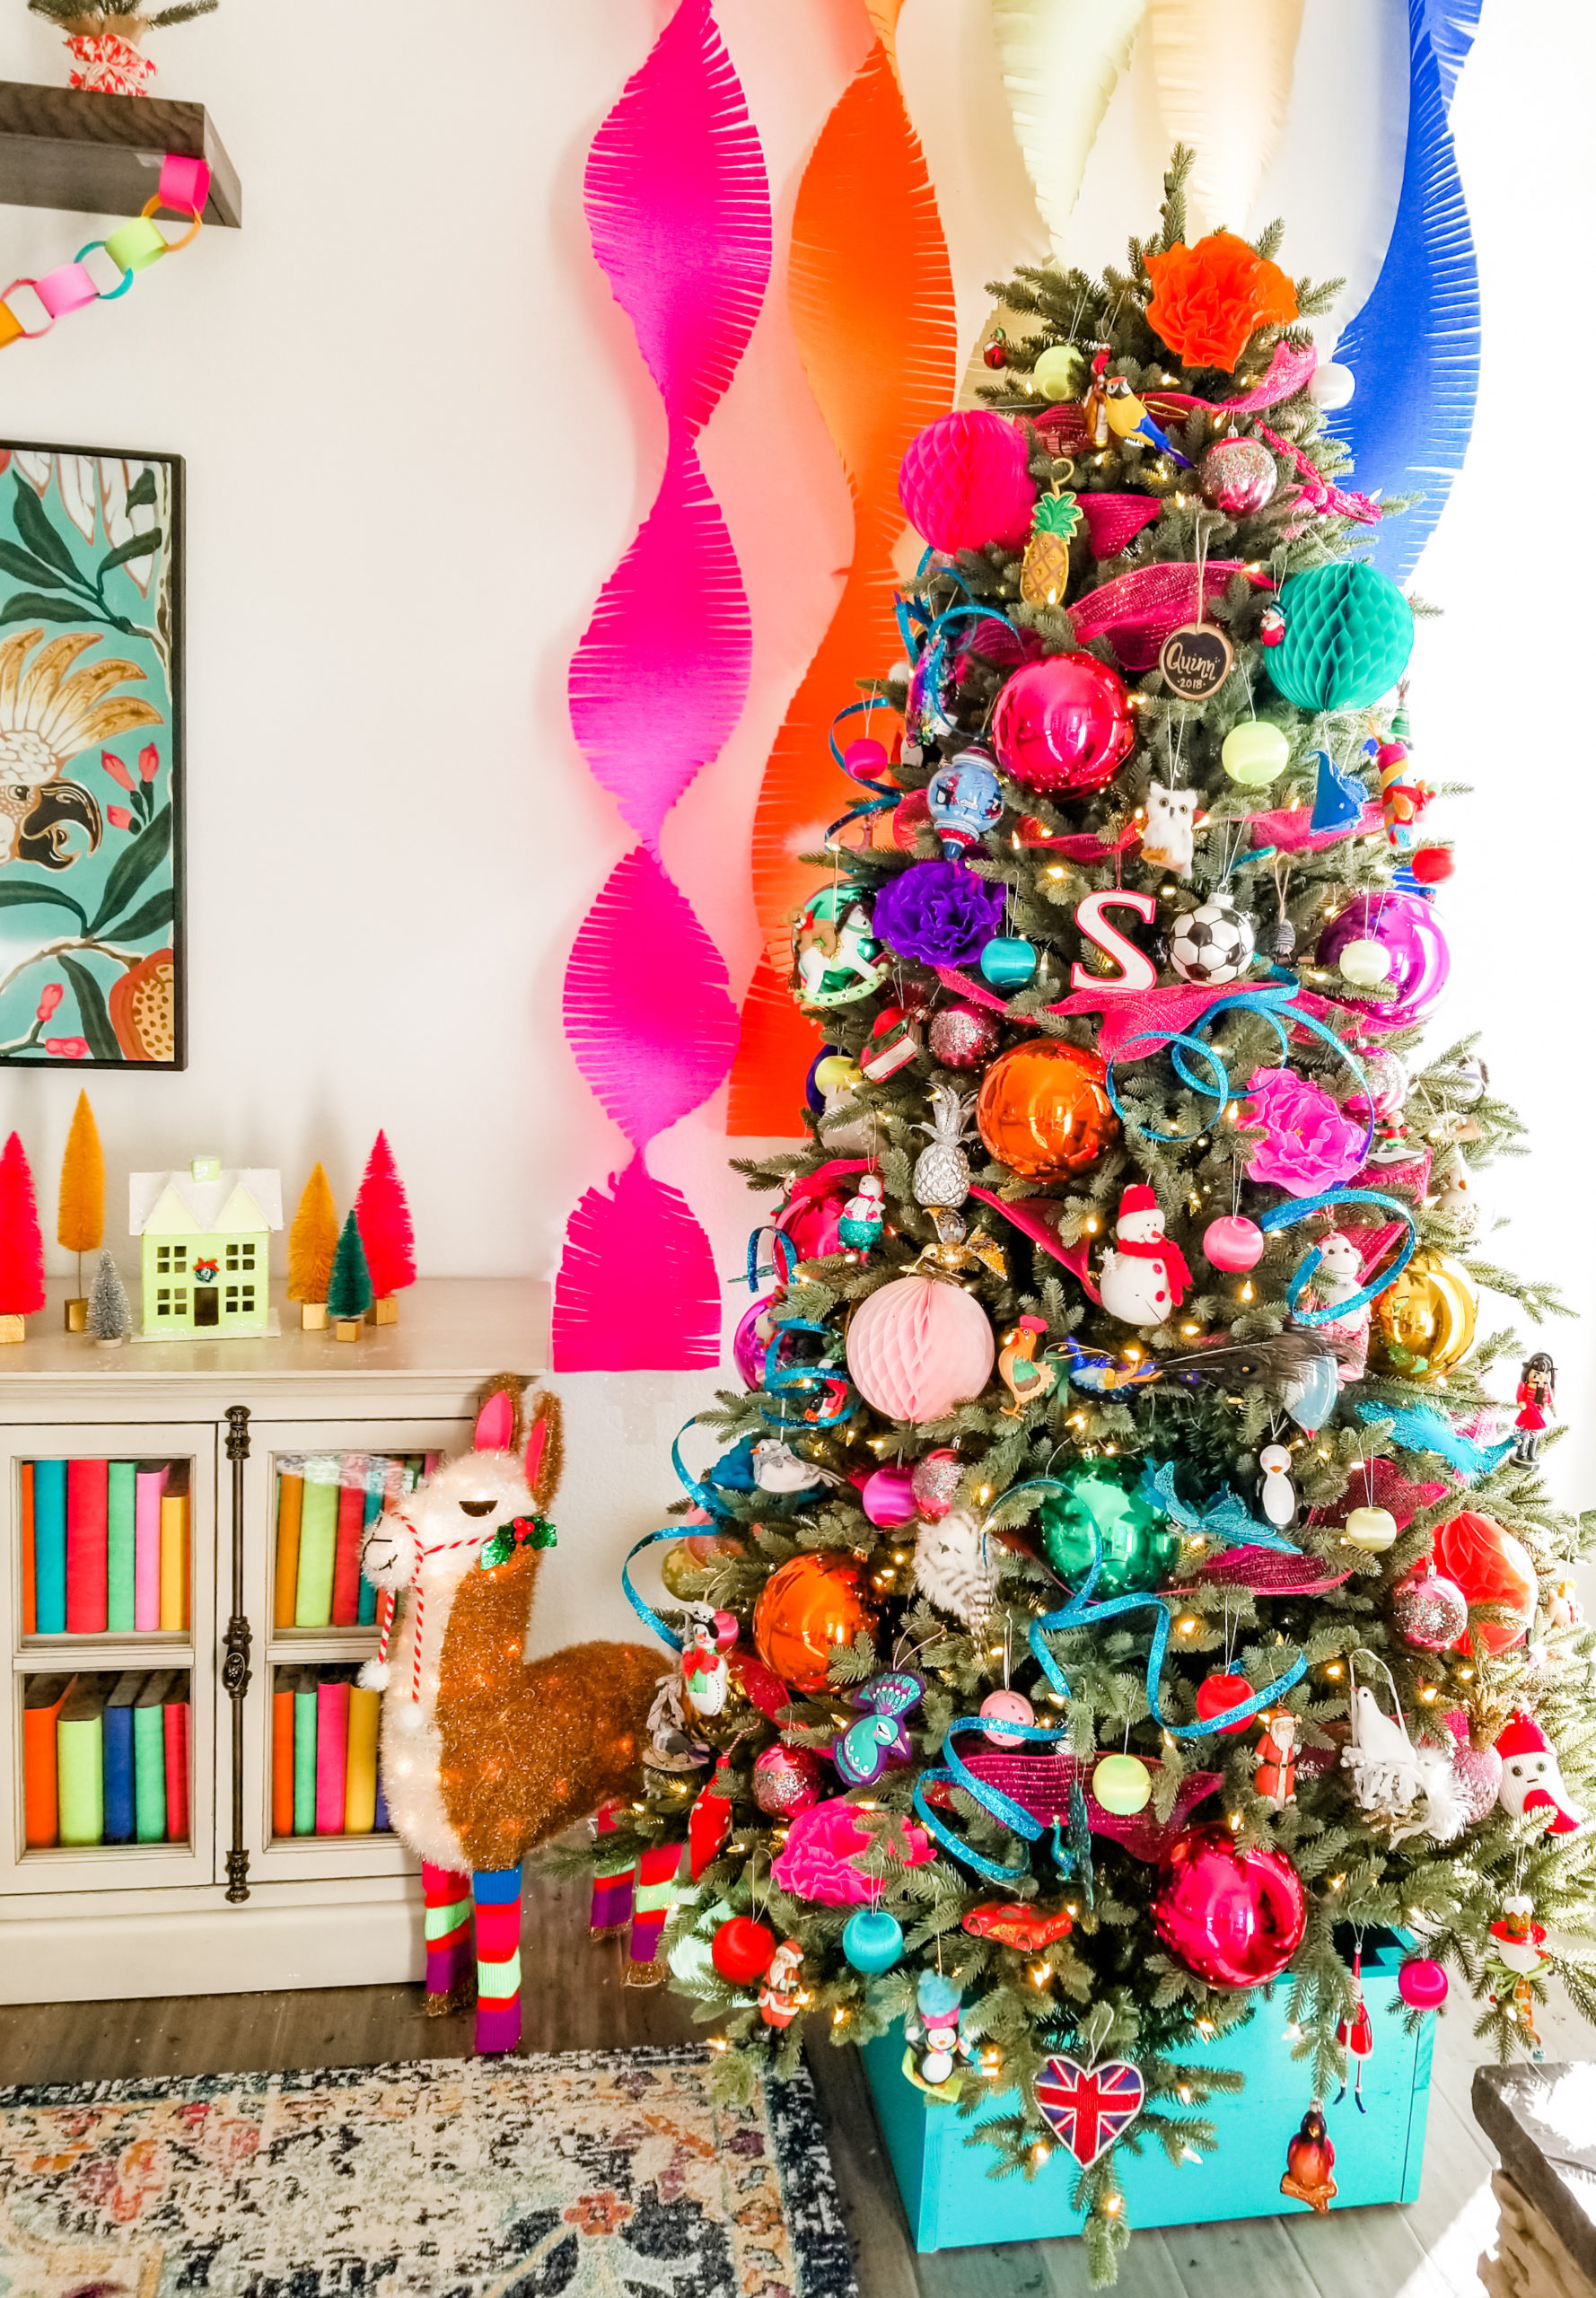 Sensational merry and bright Christmas tree